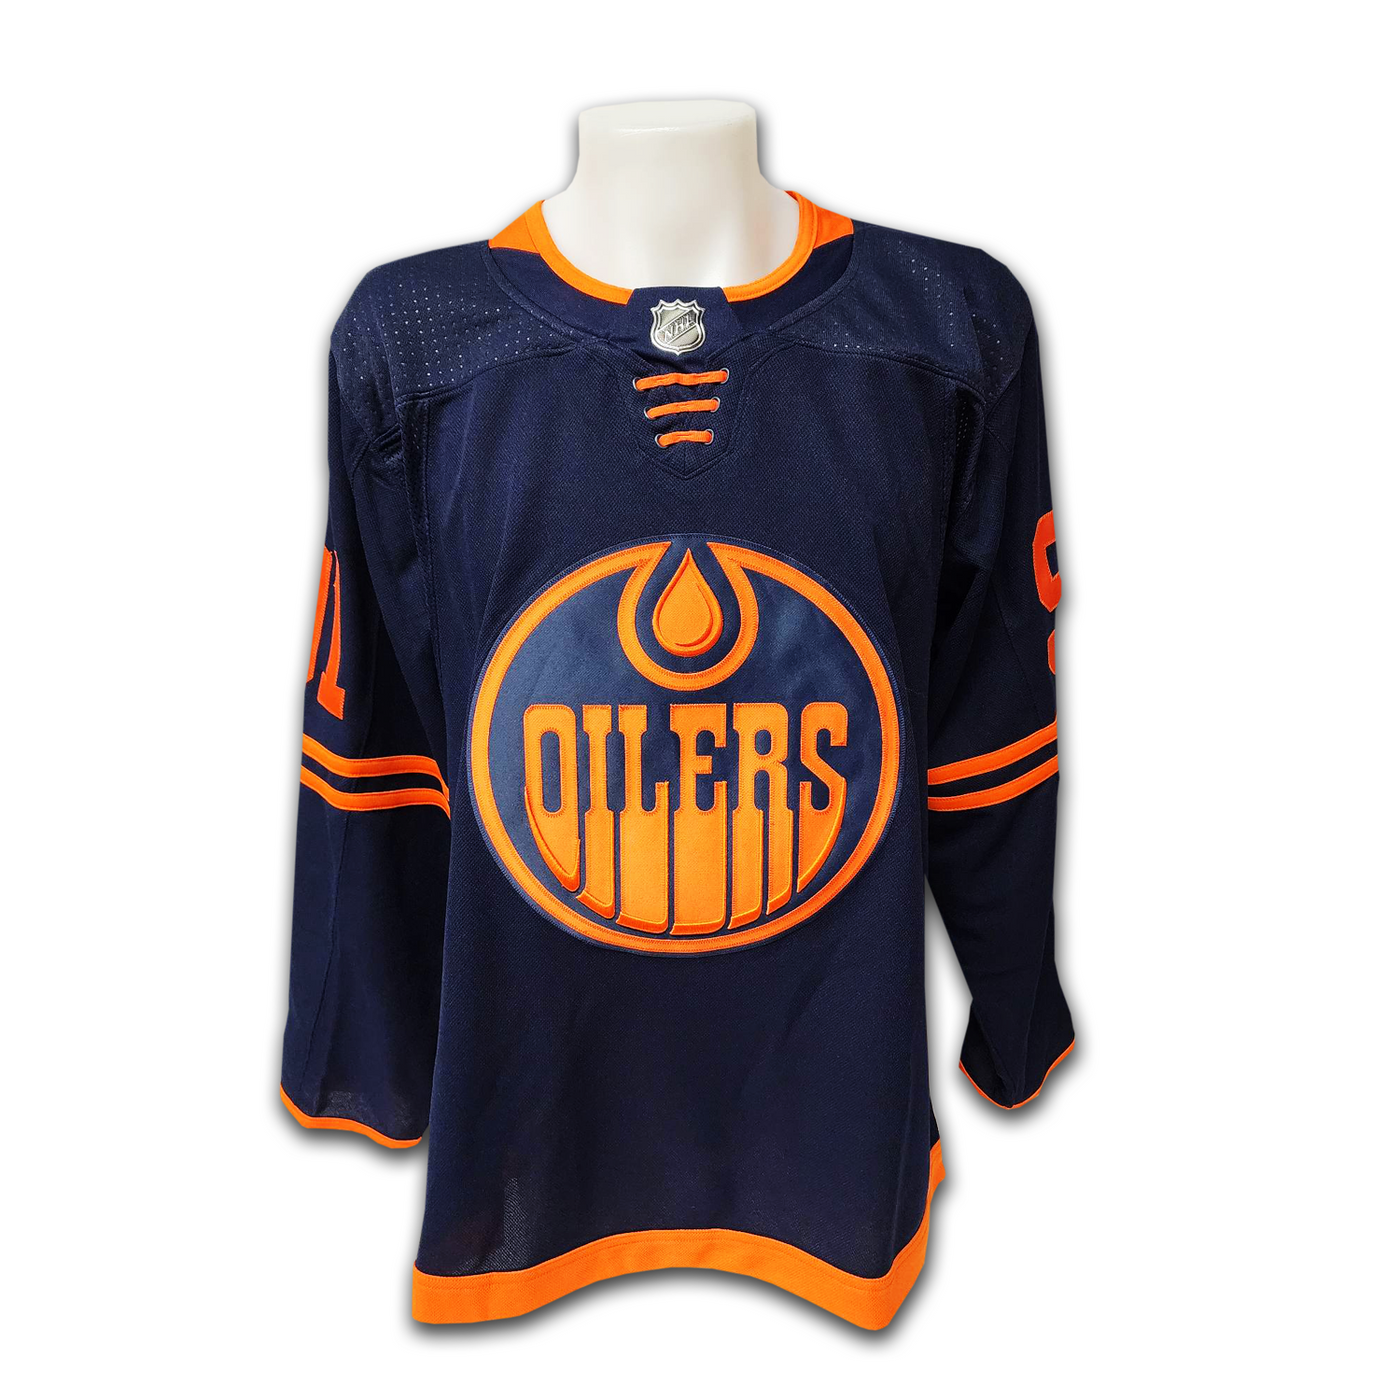 Evander Kane Edmonton Oilers Alternate Adidas Jersey Inscribed Oil Country